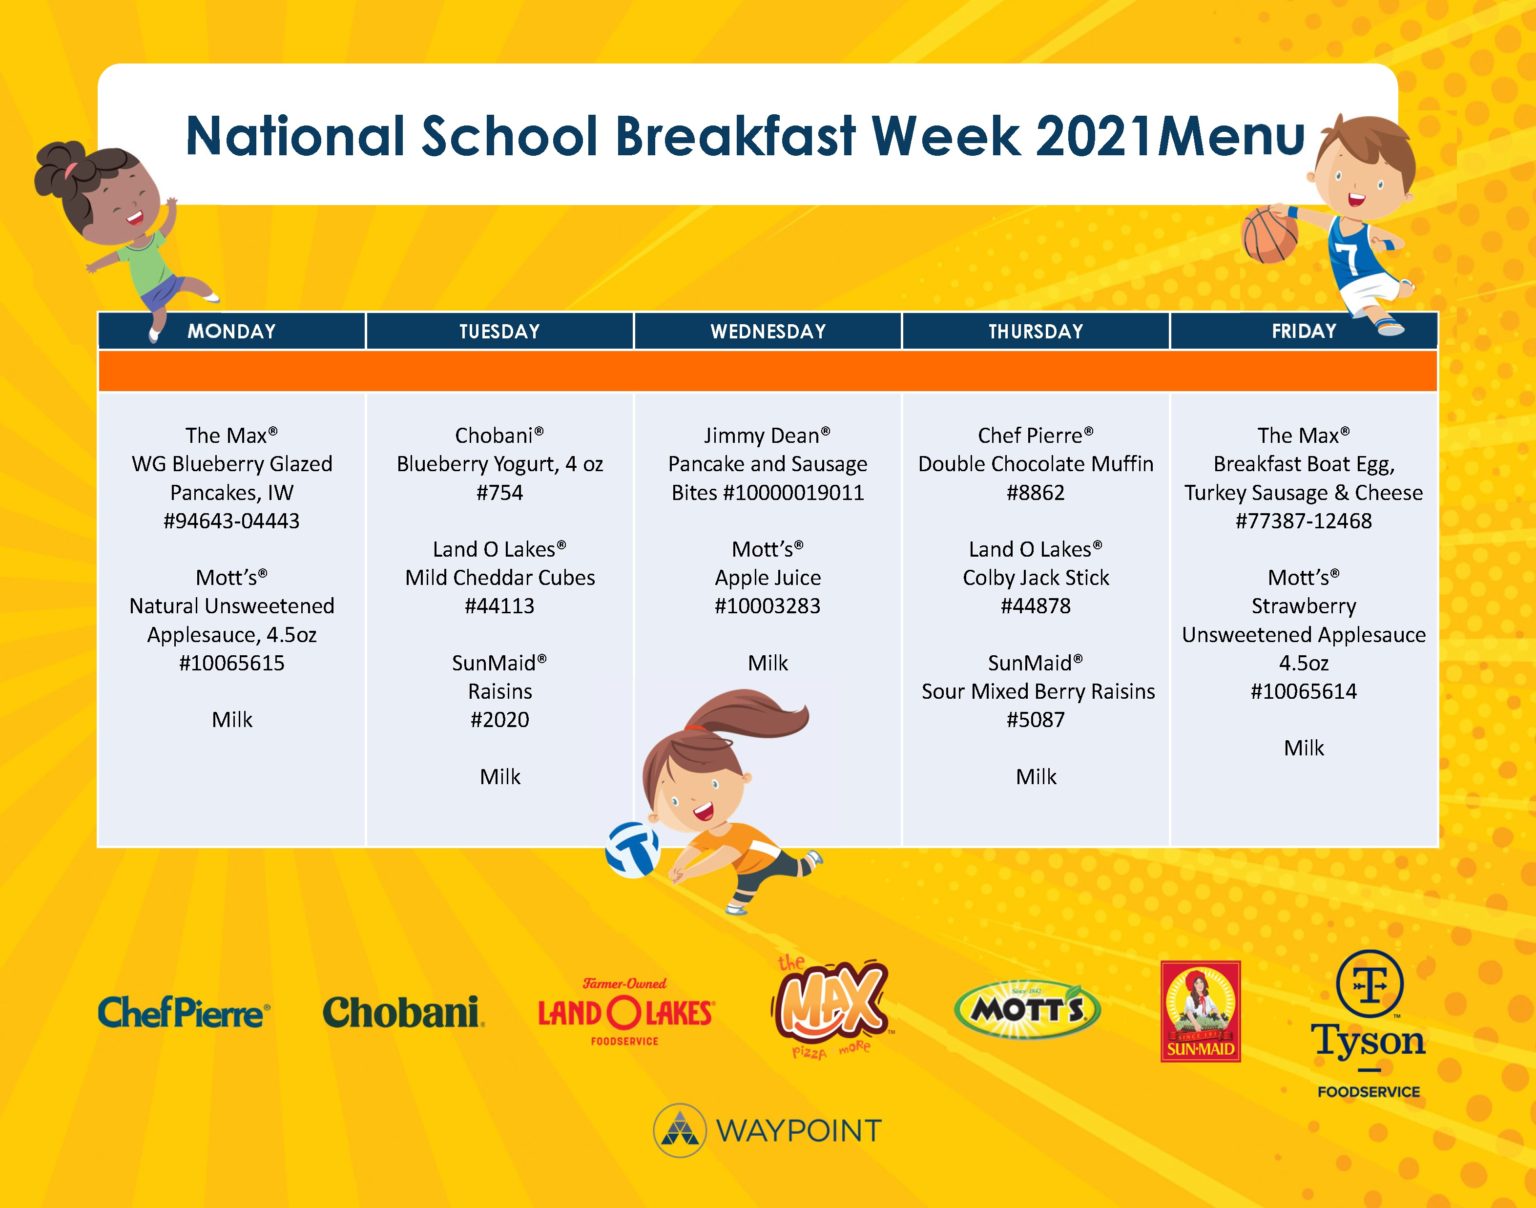 National School Breakfast Week (NSBW) Waypoint